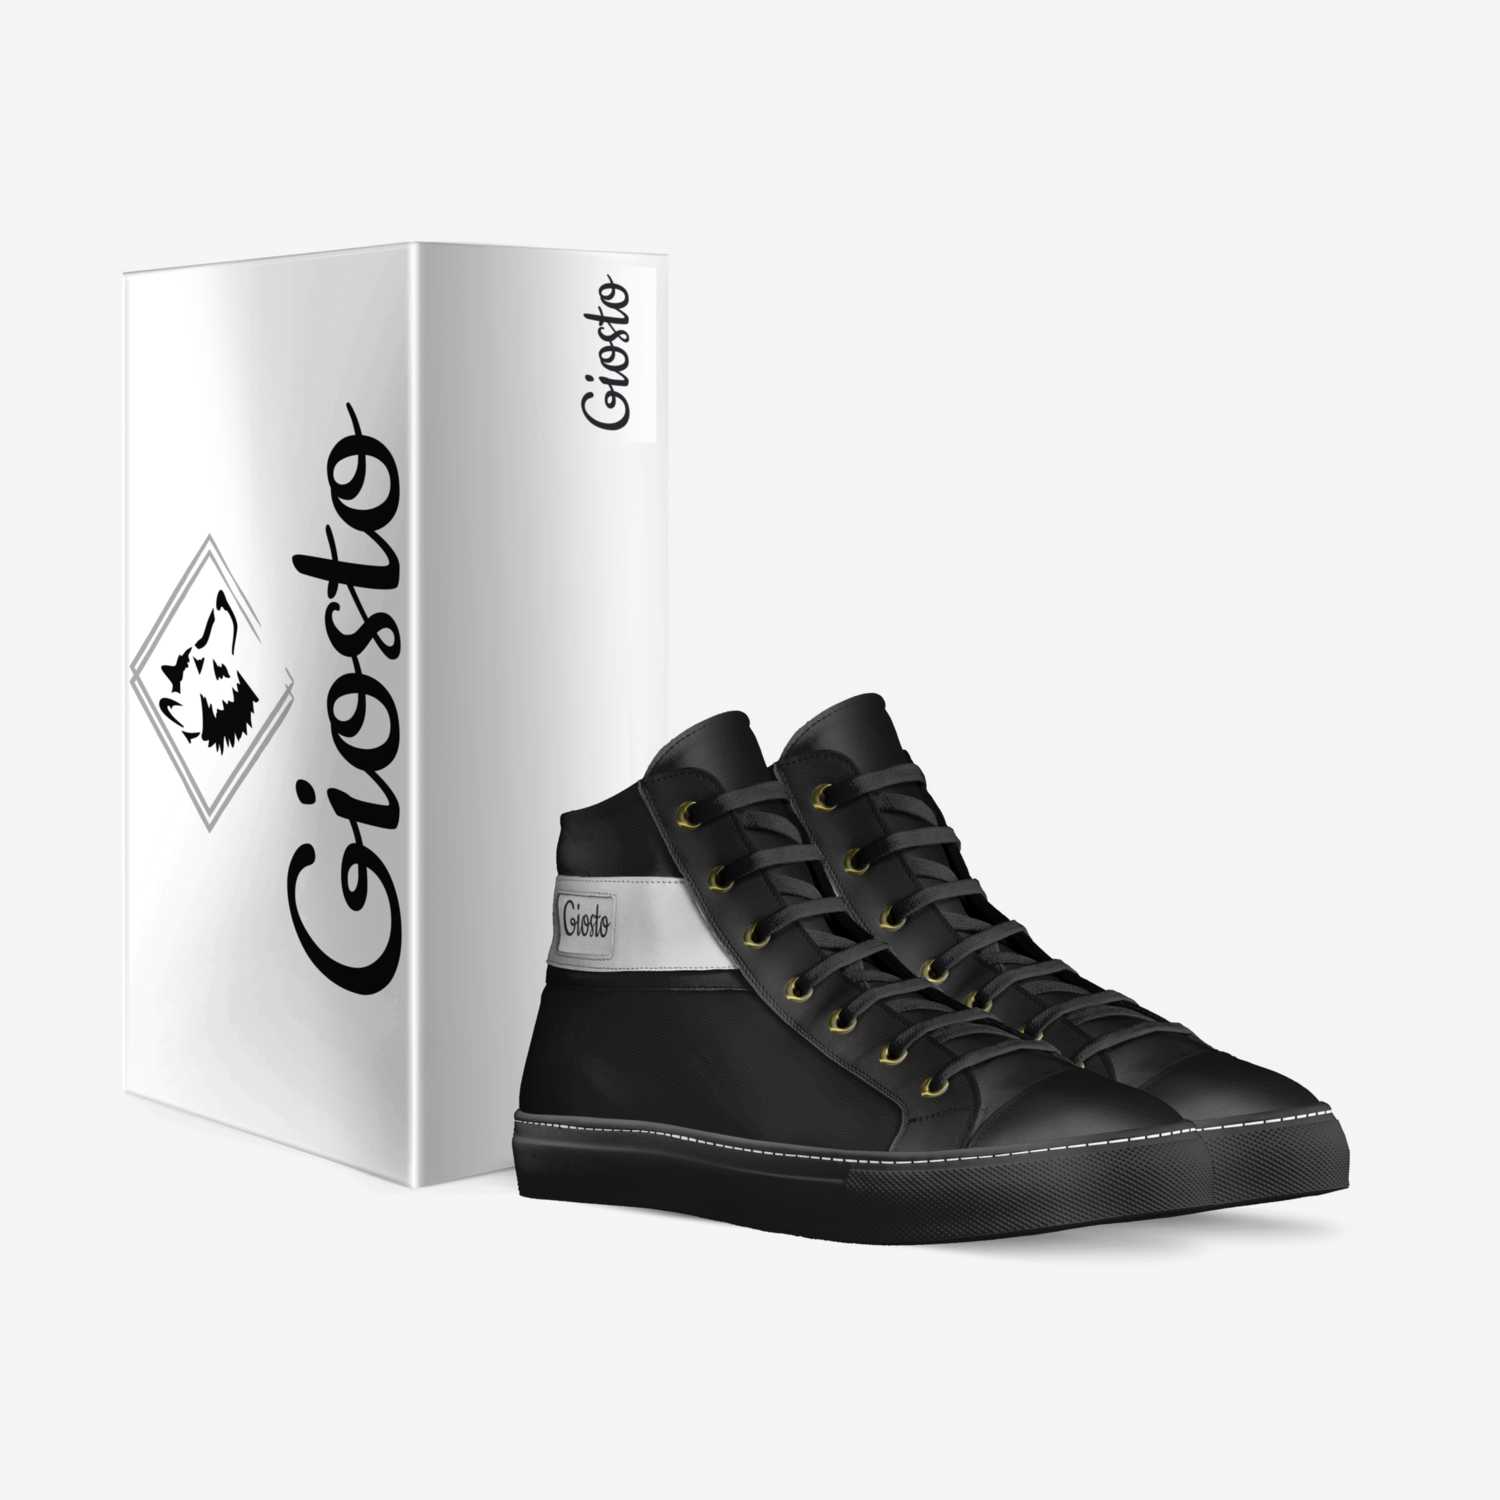 Giosto Step custom made in Italy shoes by Giorgio Franco | Box view